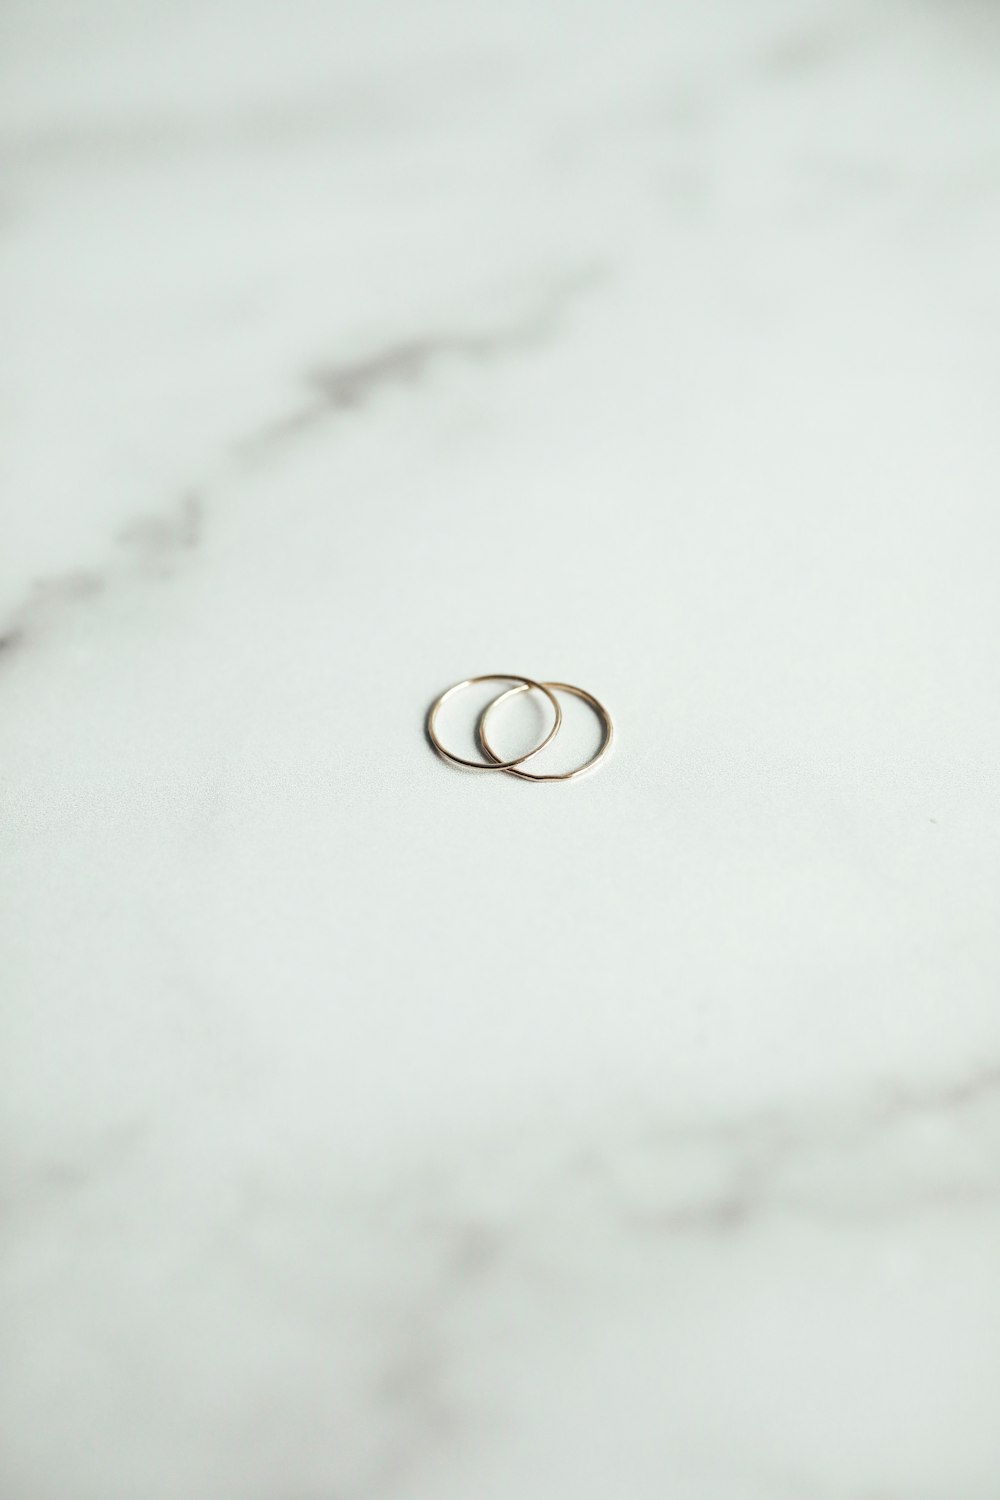 silver ring on white textile